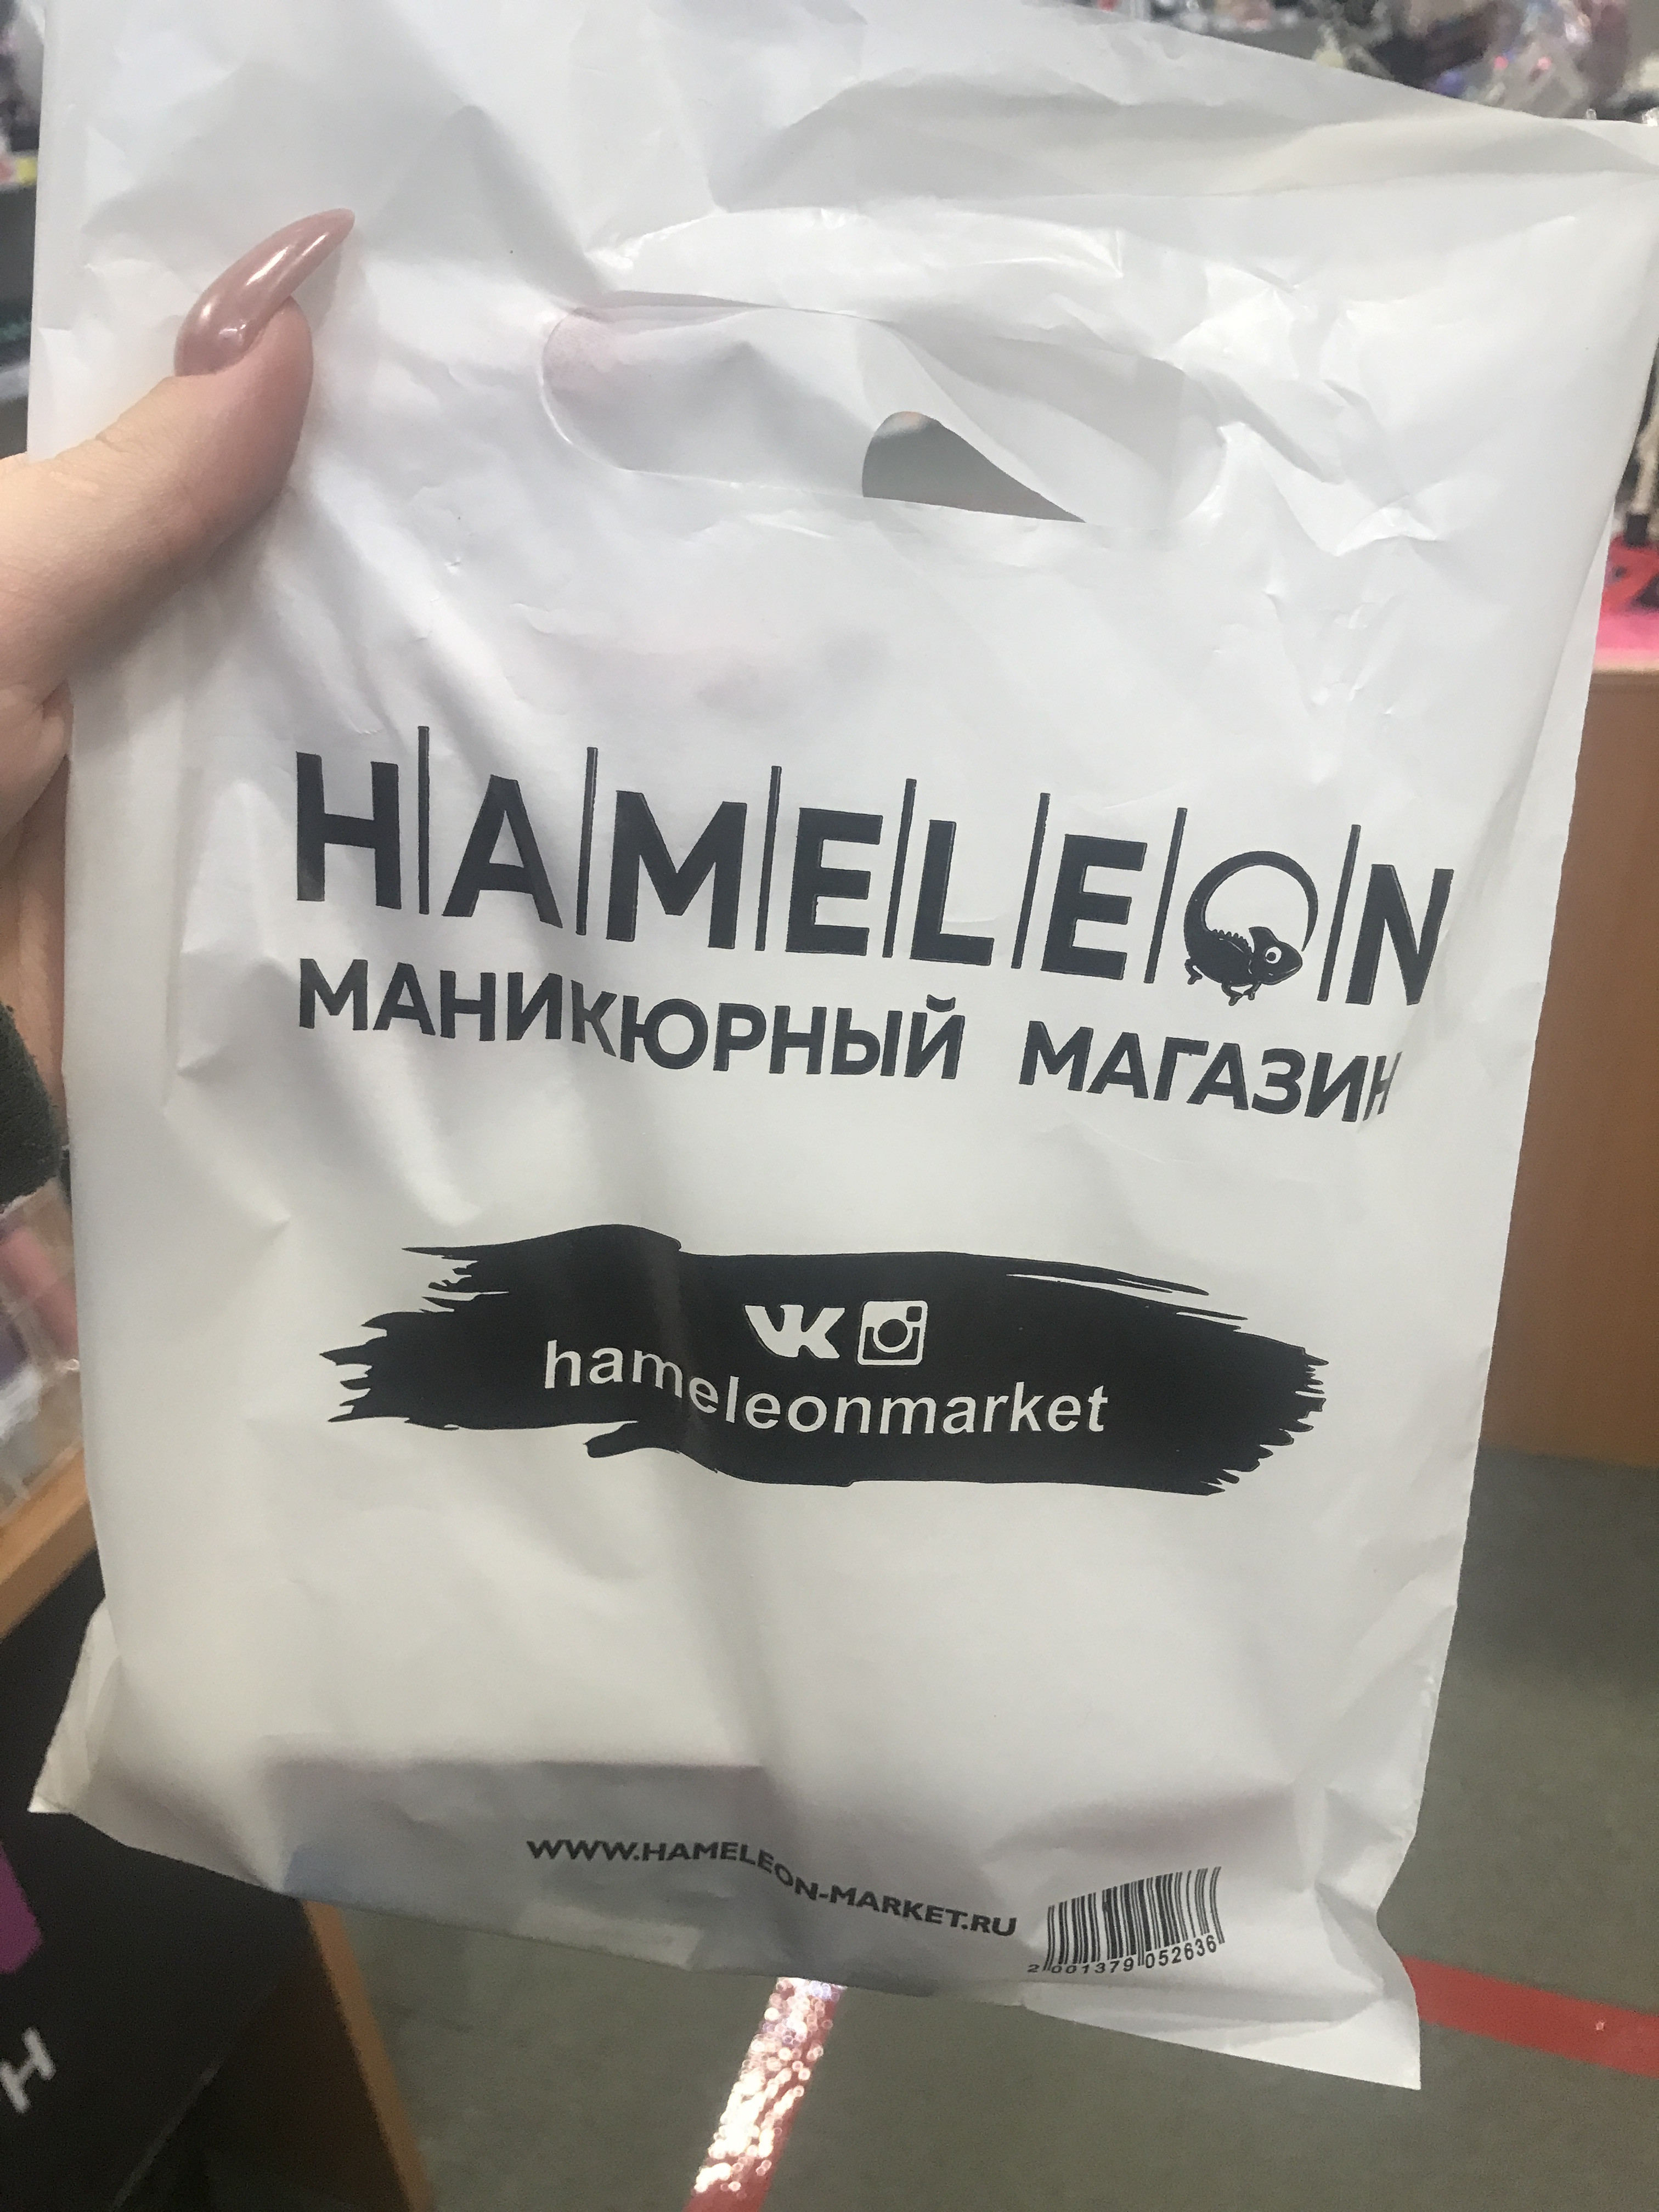 Хамелеон магазин новосибирск. Магазин хамелеон Новосибирск каталог товаров.